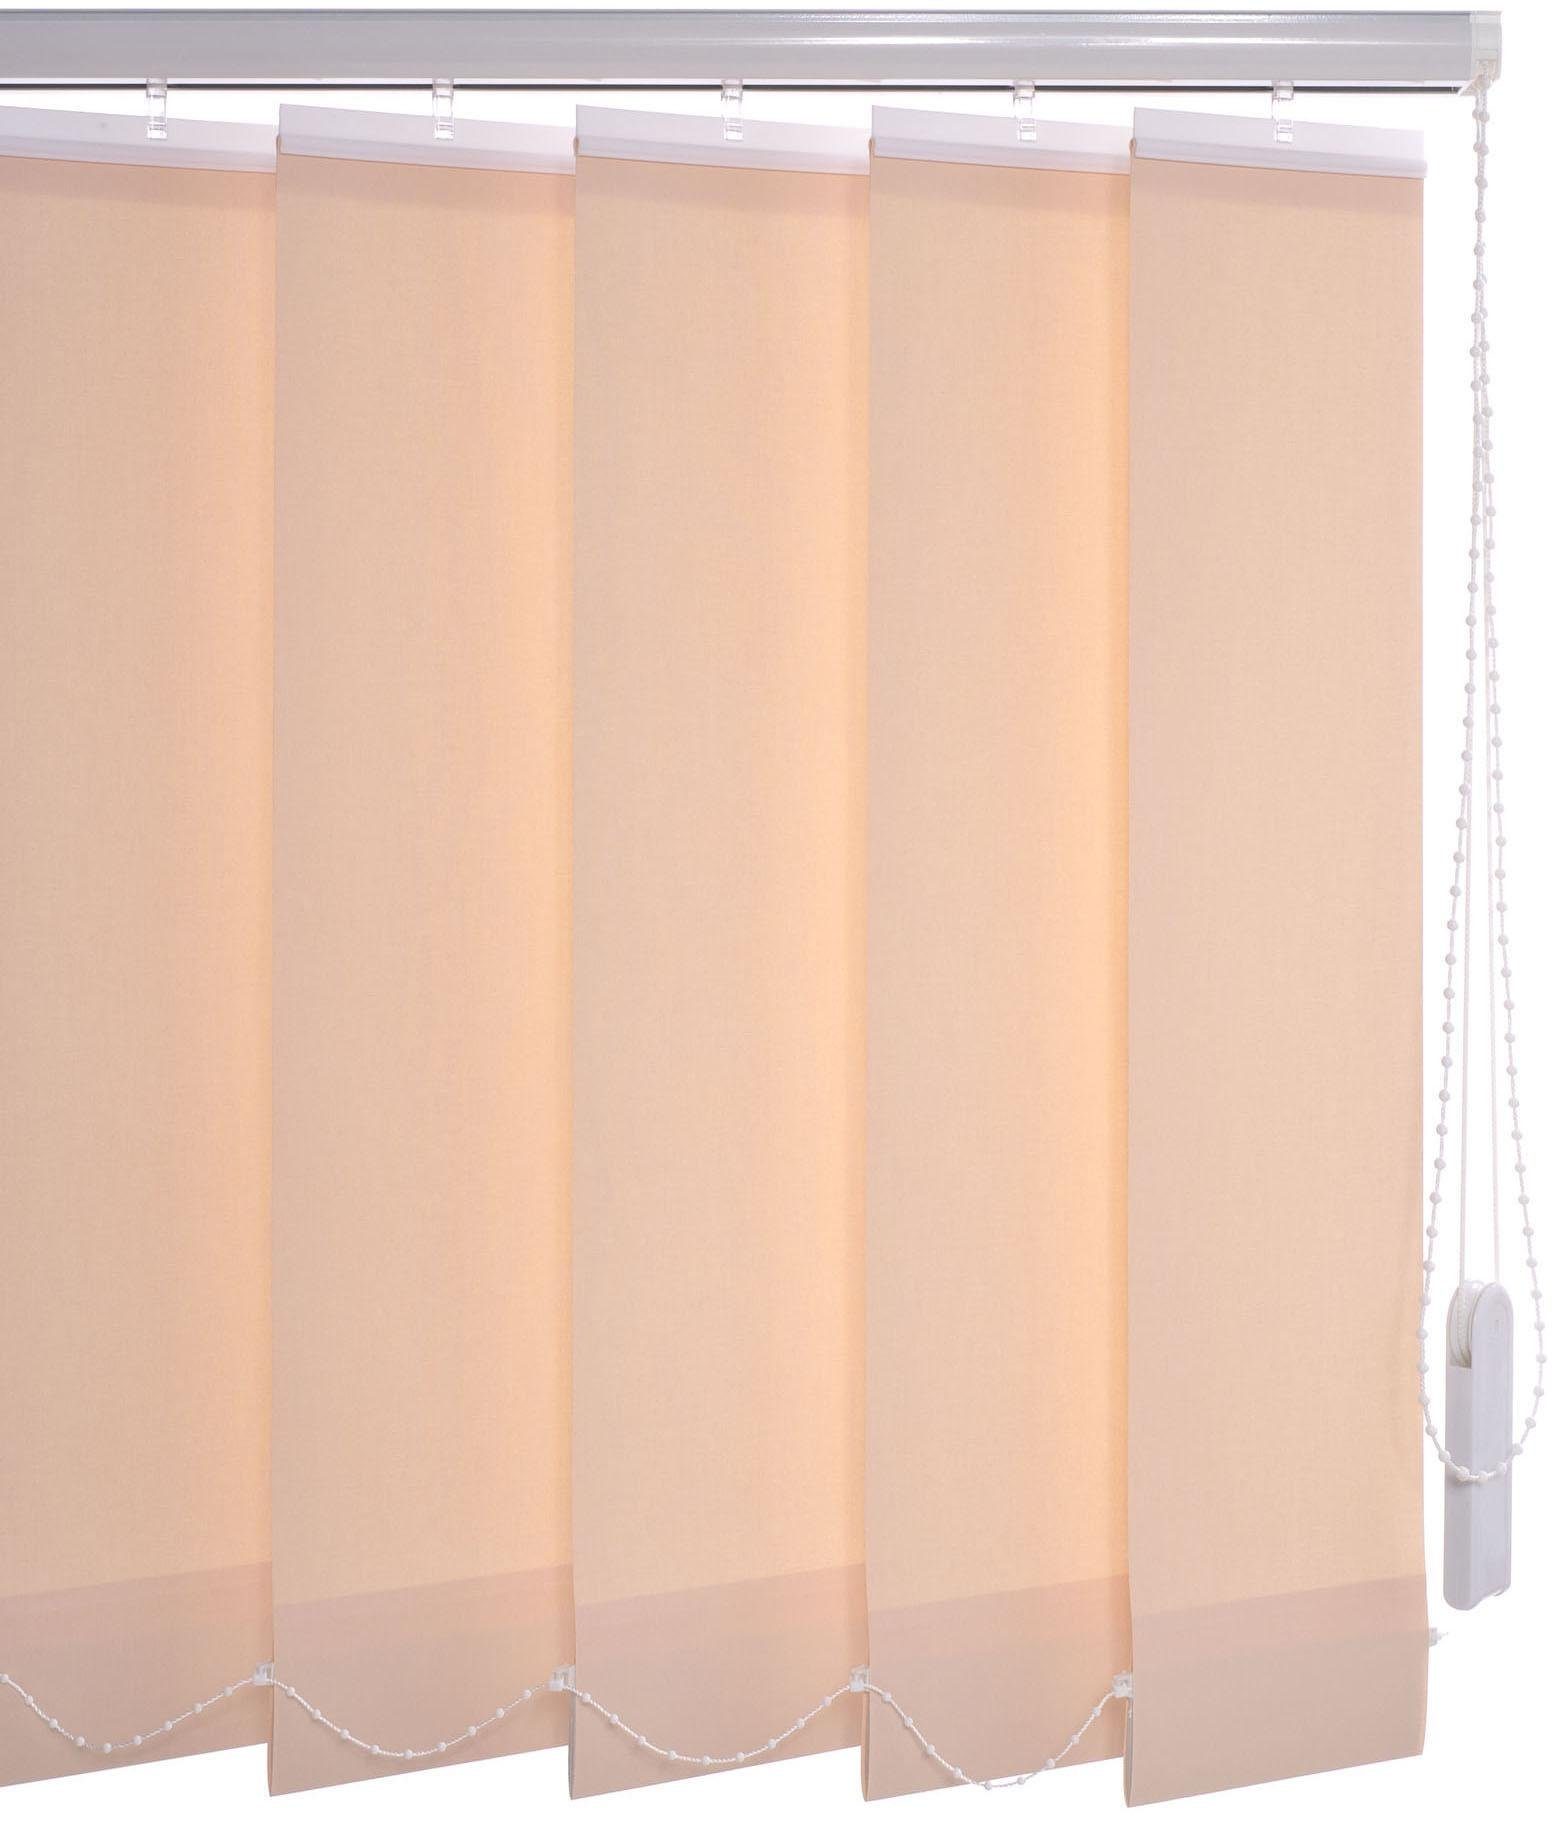 Lamellenvorhang Vertikalanlage 127 mm, Liedeco, apricot mit Bohren